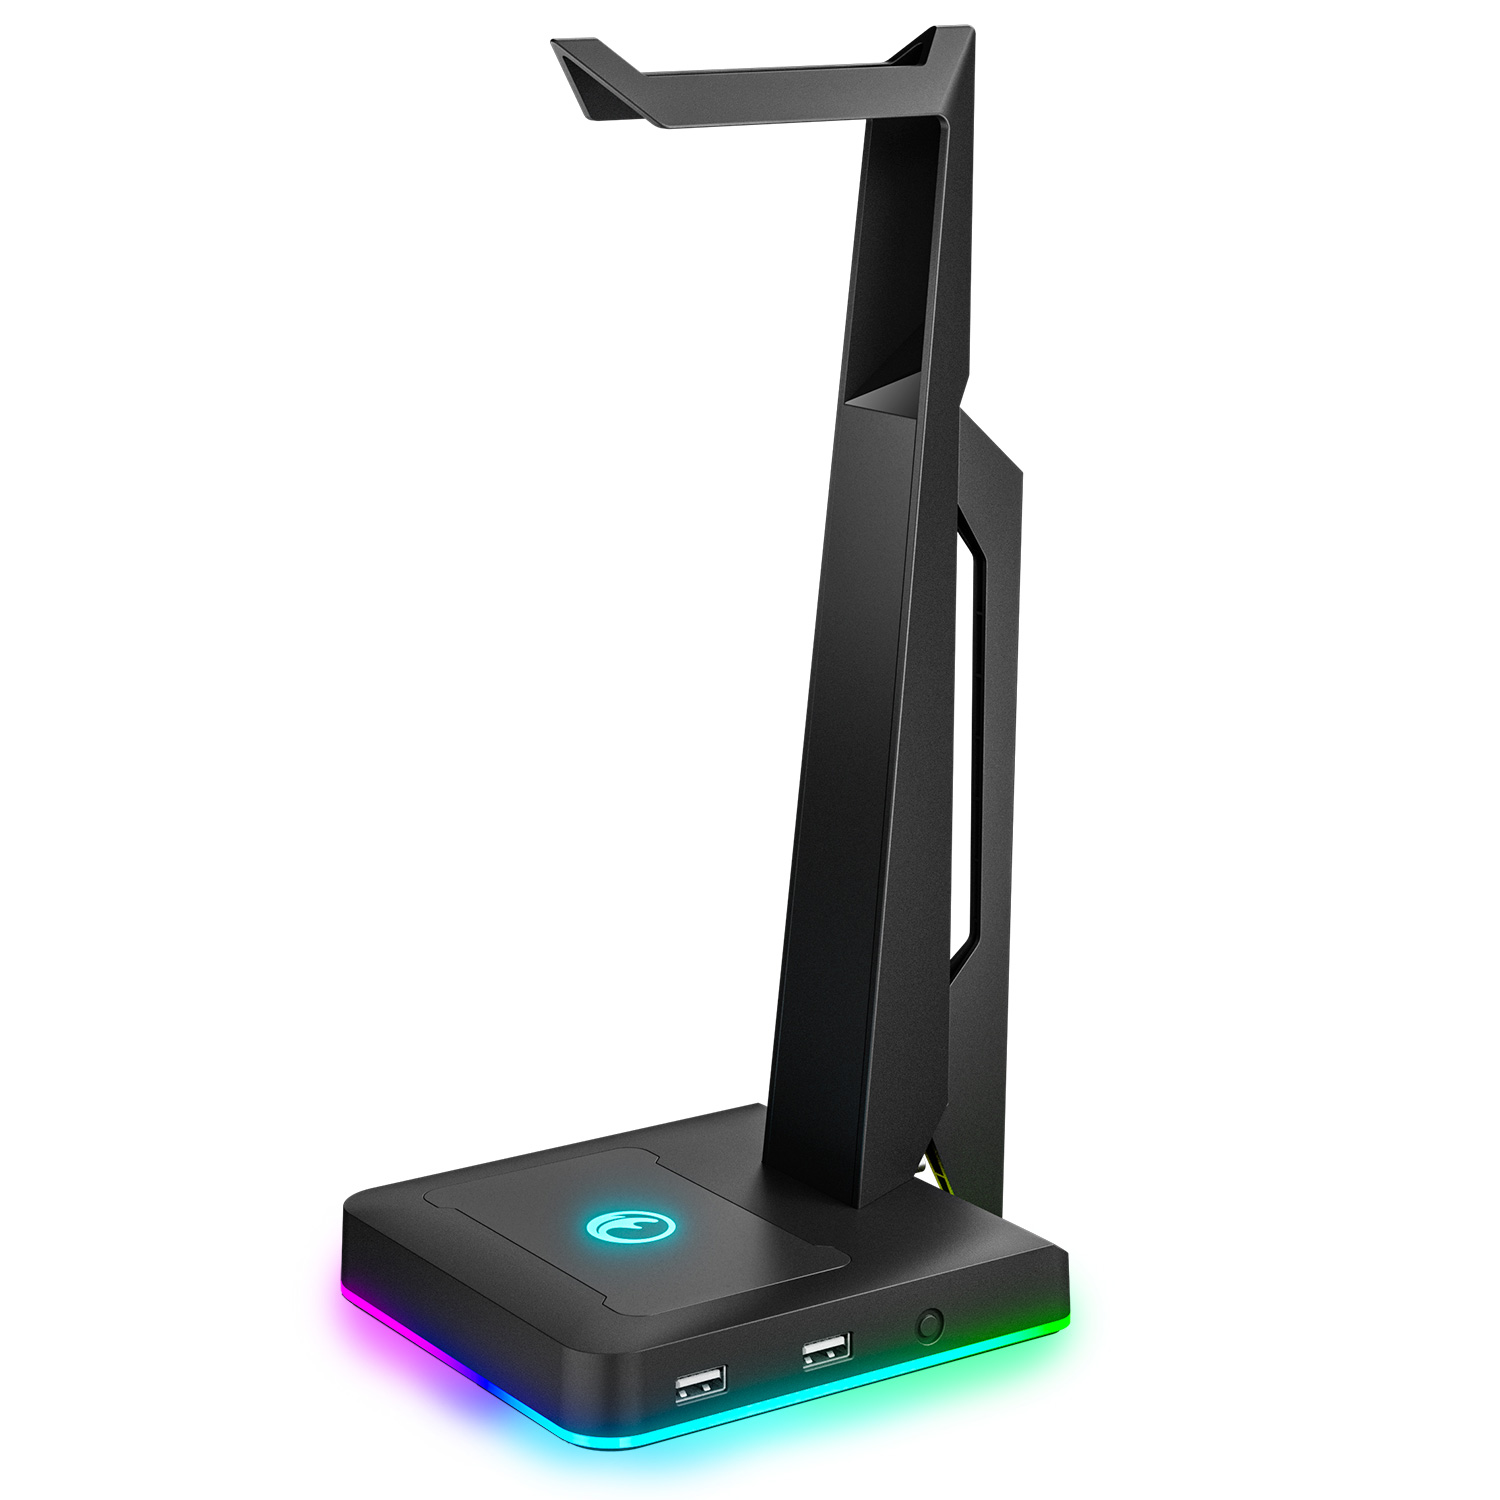 IFYOO RGB Gaming Headset Stand – Black